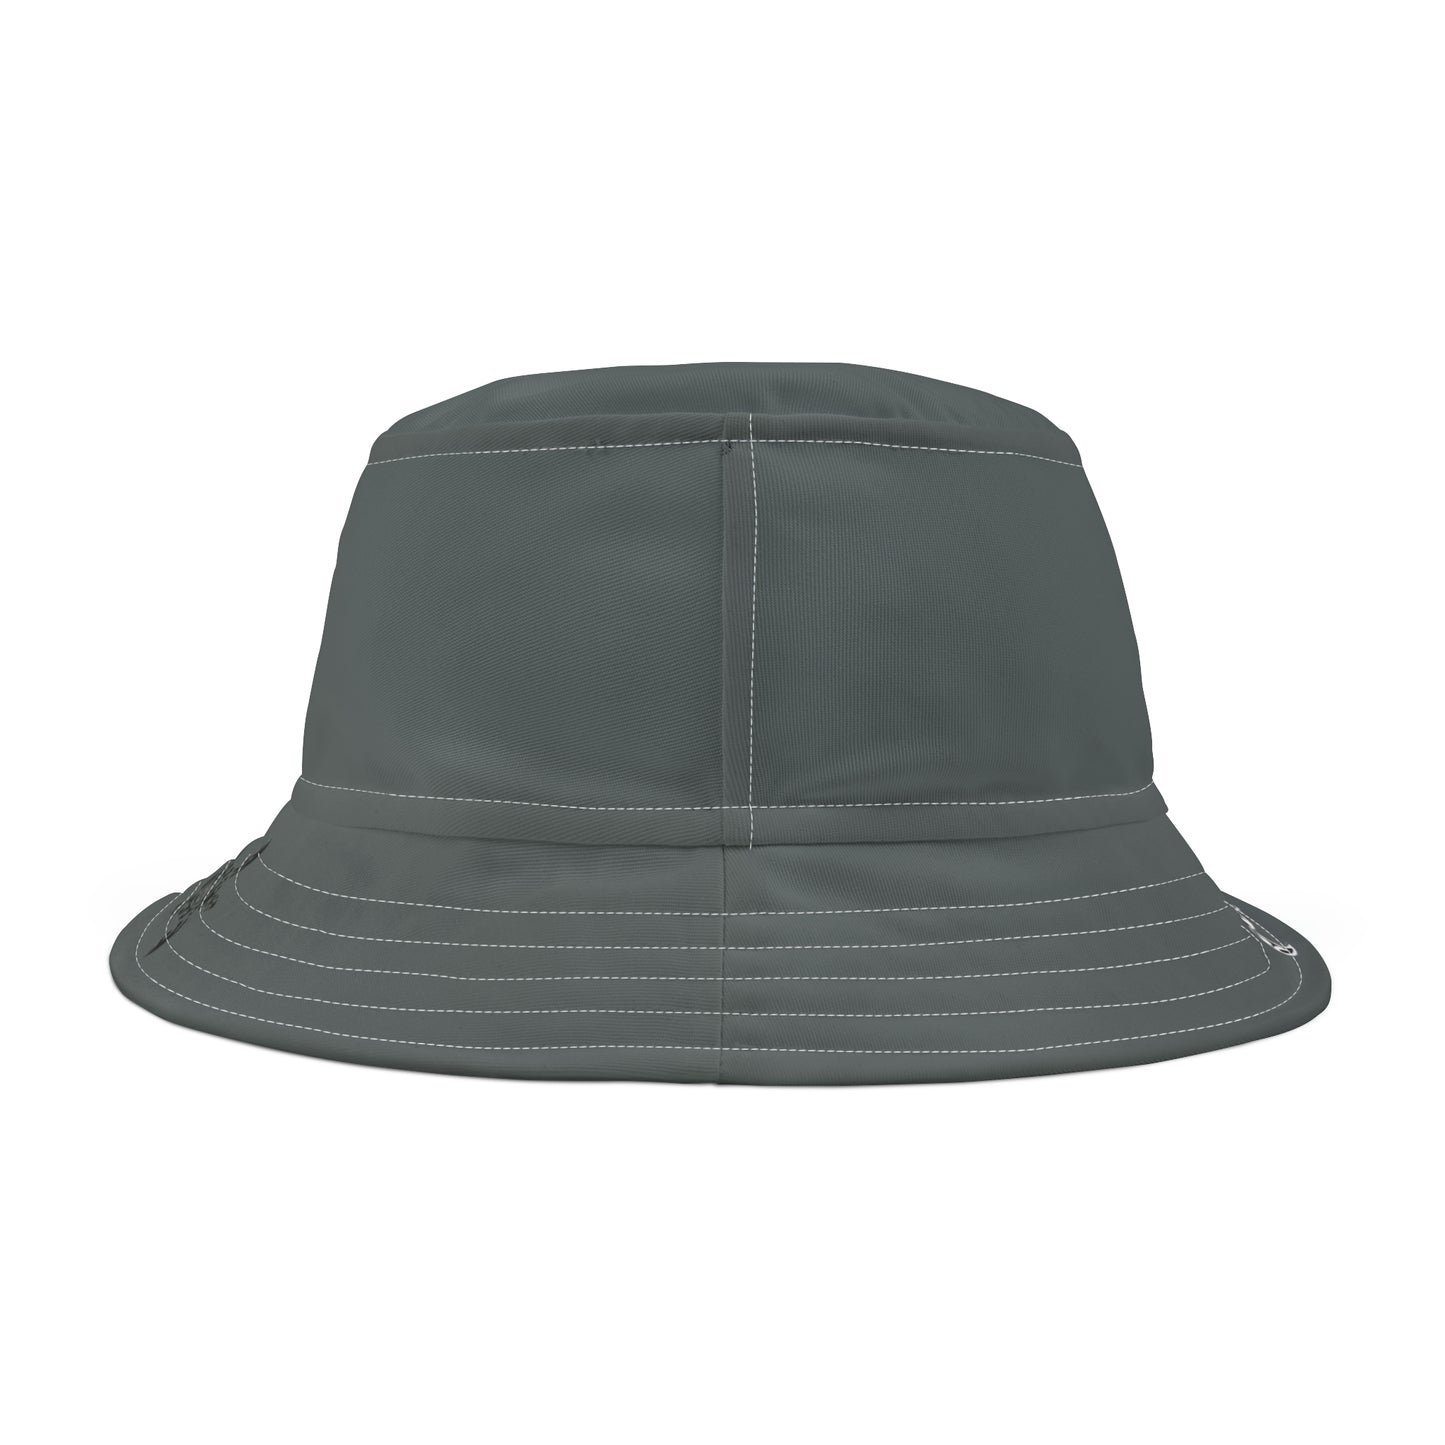 SaltwaterRagz TURTLE Bucket Hat